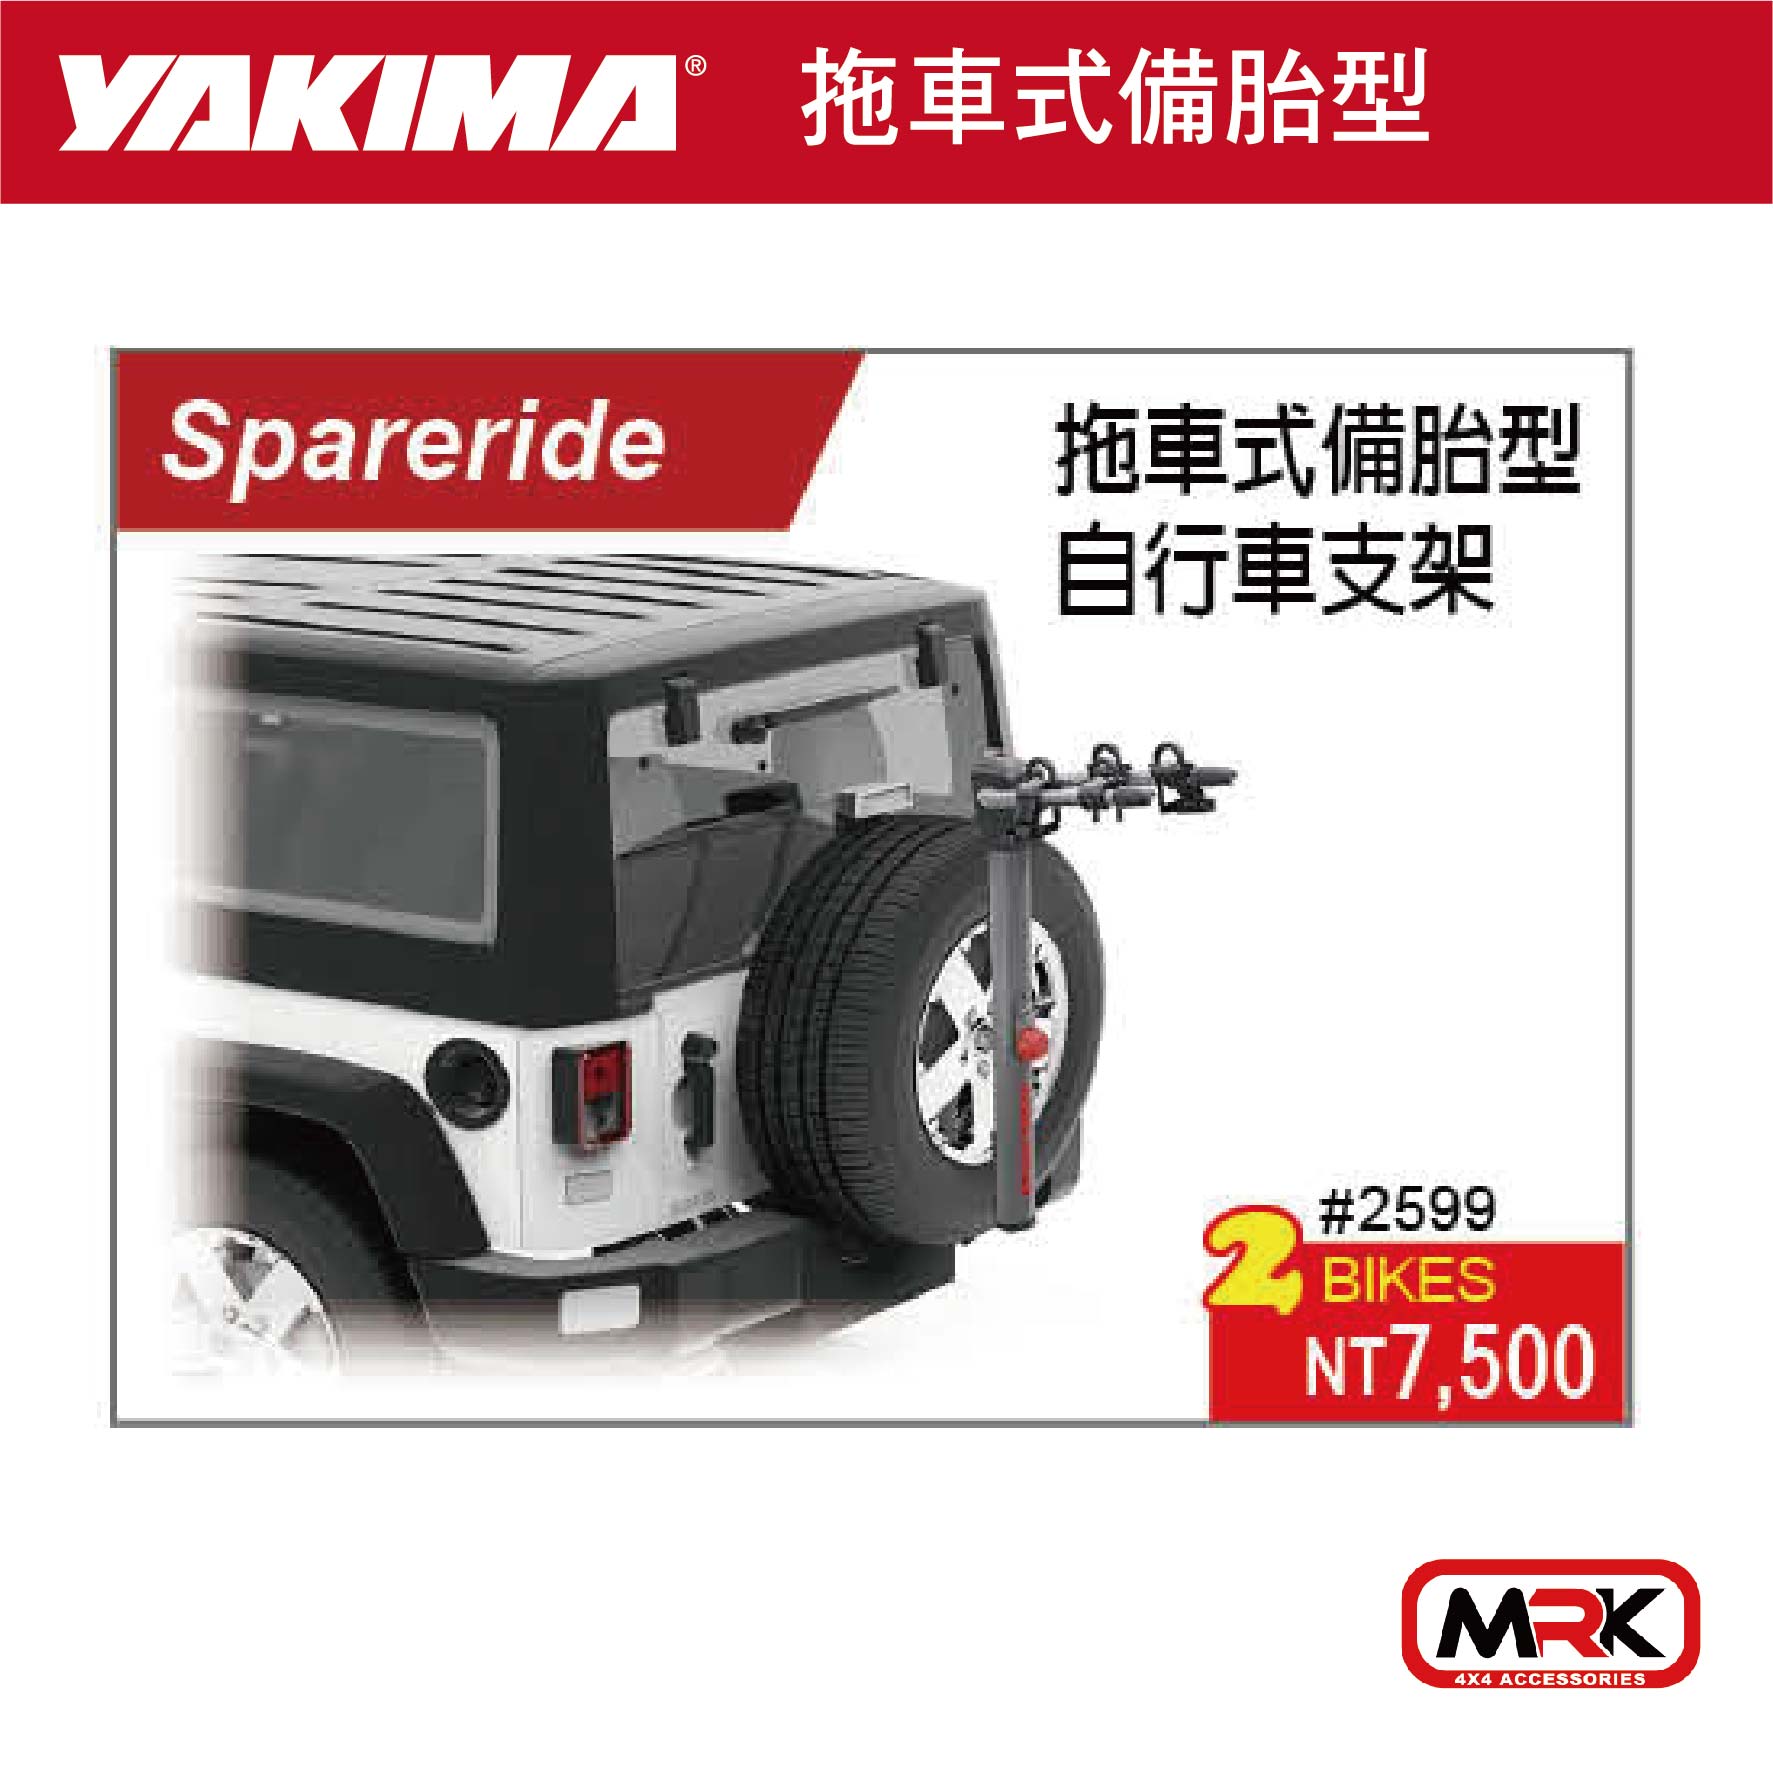 【MRK】YAKIMA SPAREAIDE 備胎型 拖車式 自行車攜車架 2車 2599